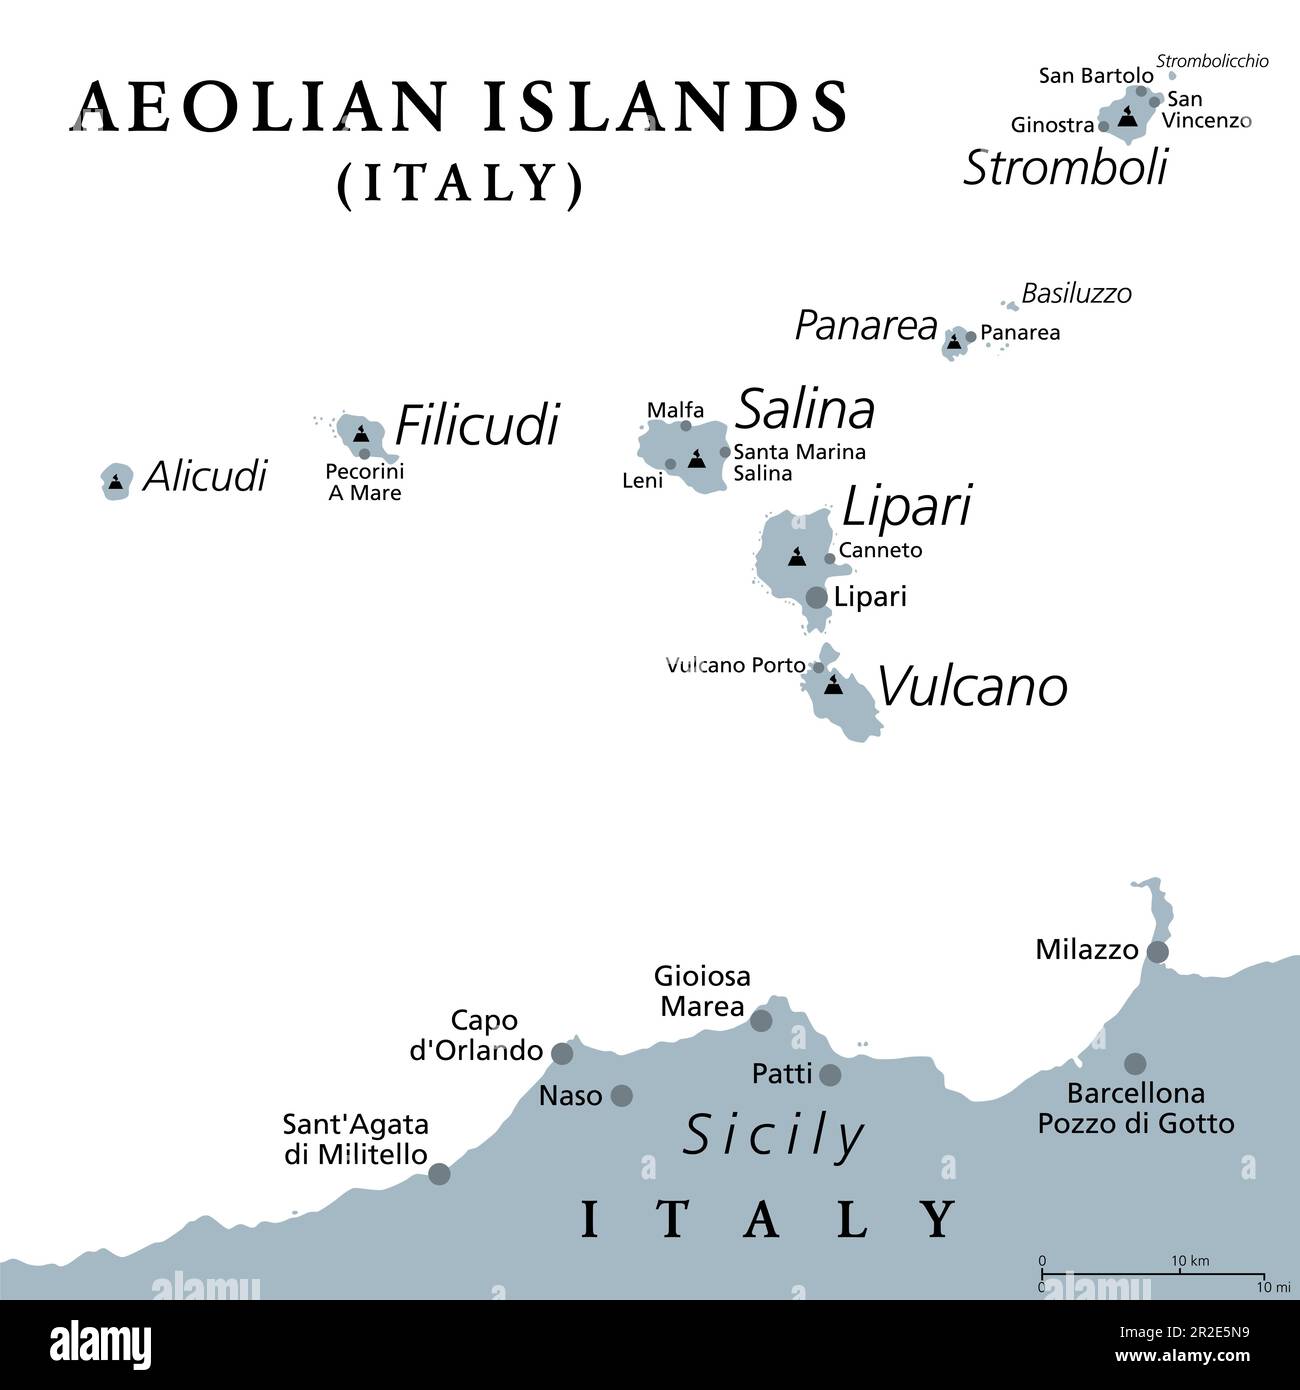 Aeolian Islands, gray political map. Volcanic archipelago in the Tyrrhenian Sea north of Sicily, Italy. Also called Lipari Islands. Stock Photo